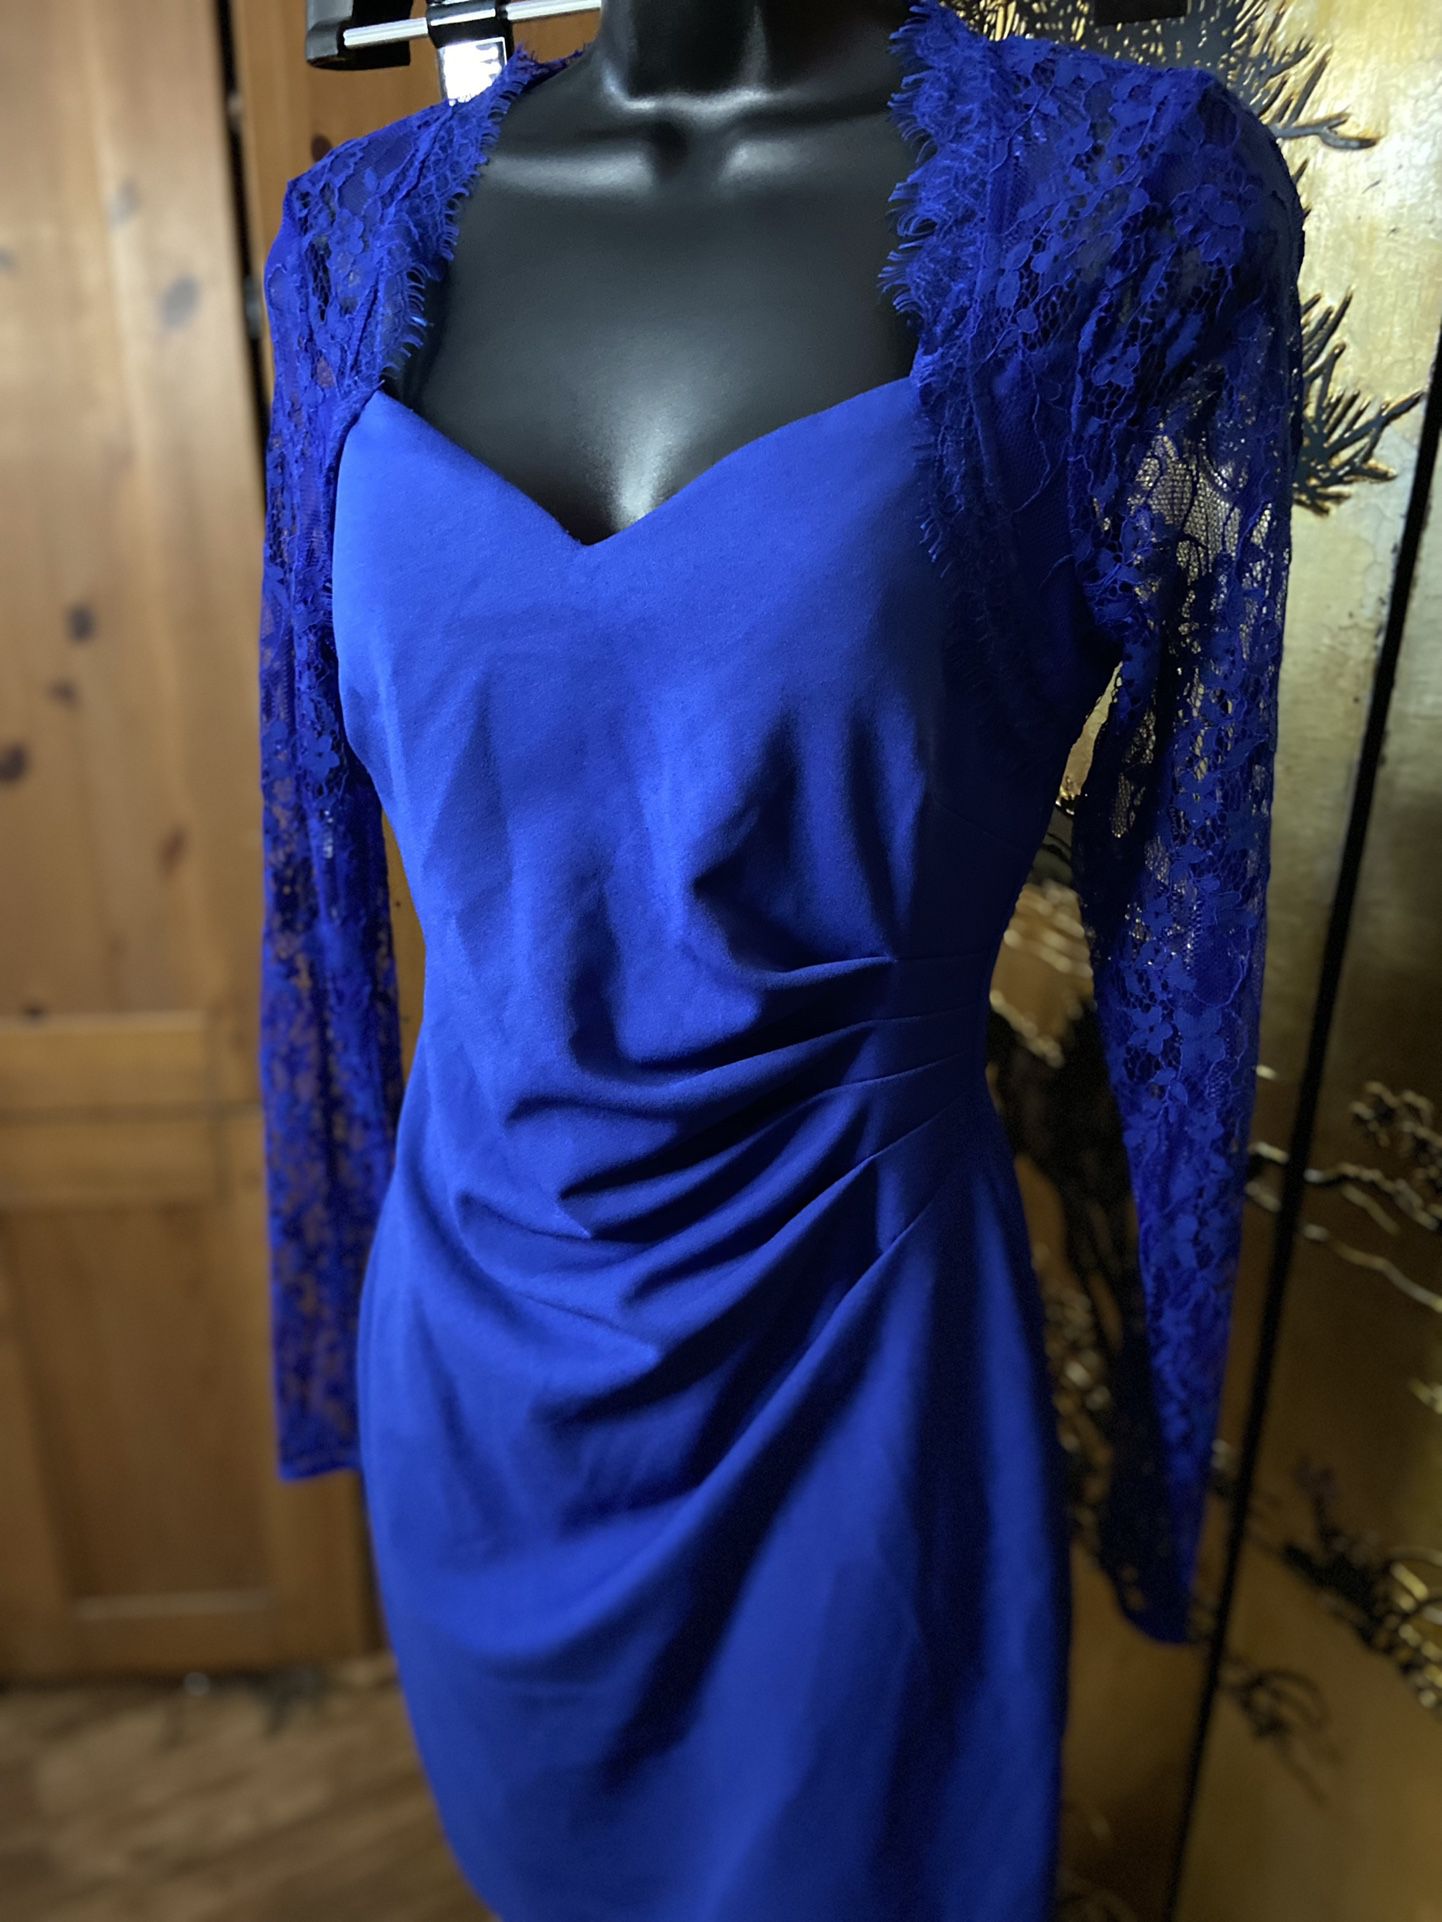 Guess Brand Dress Blue Royal Color Size 4